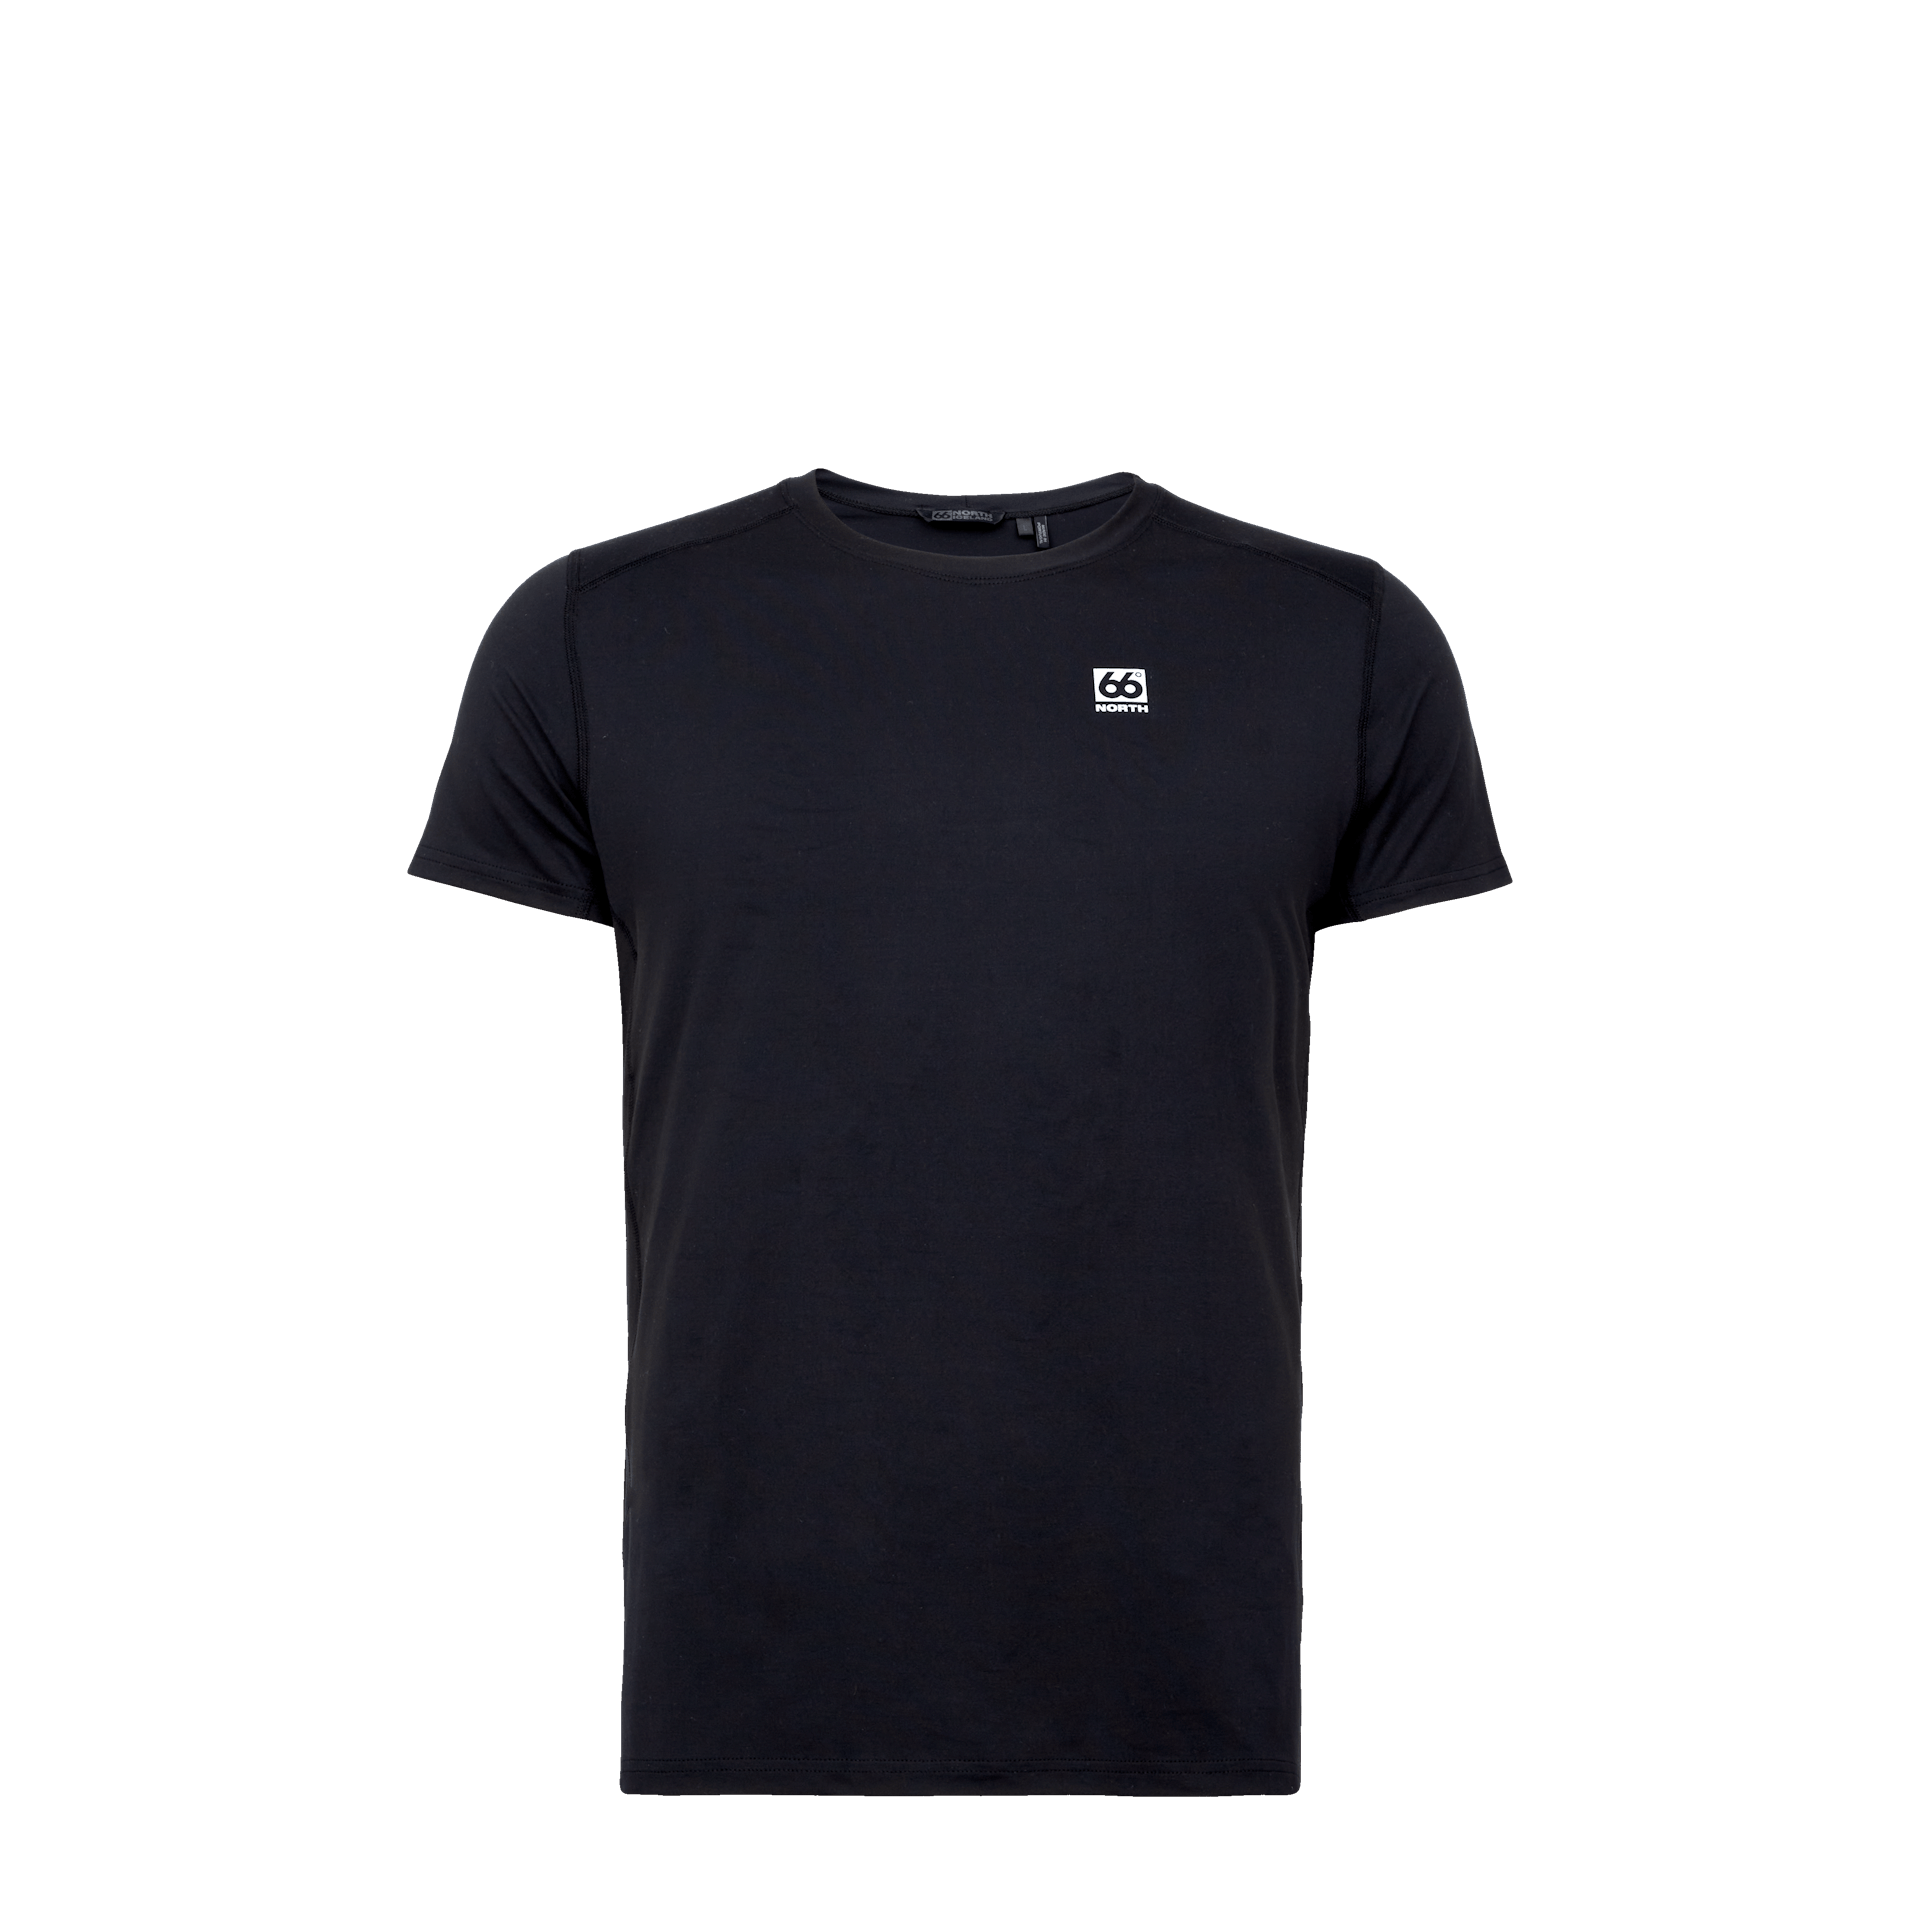 Adalvik T-Shirt